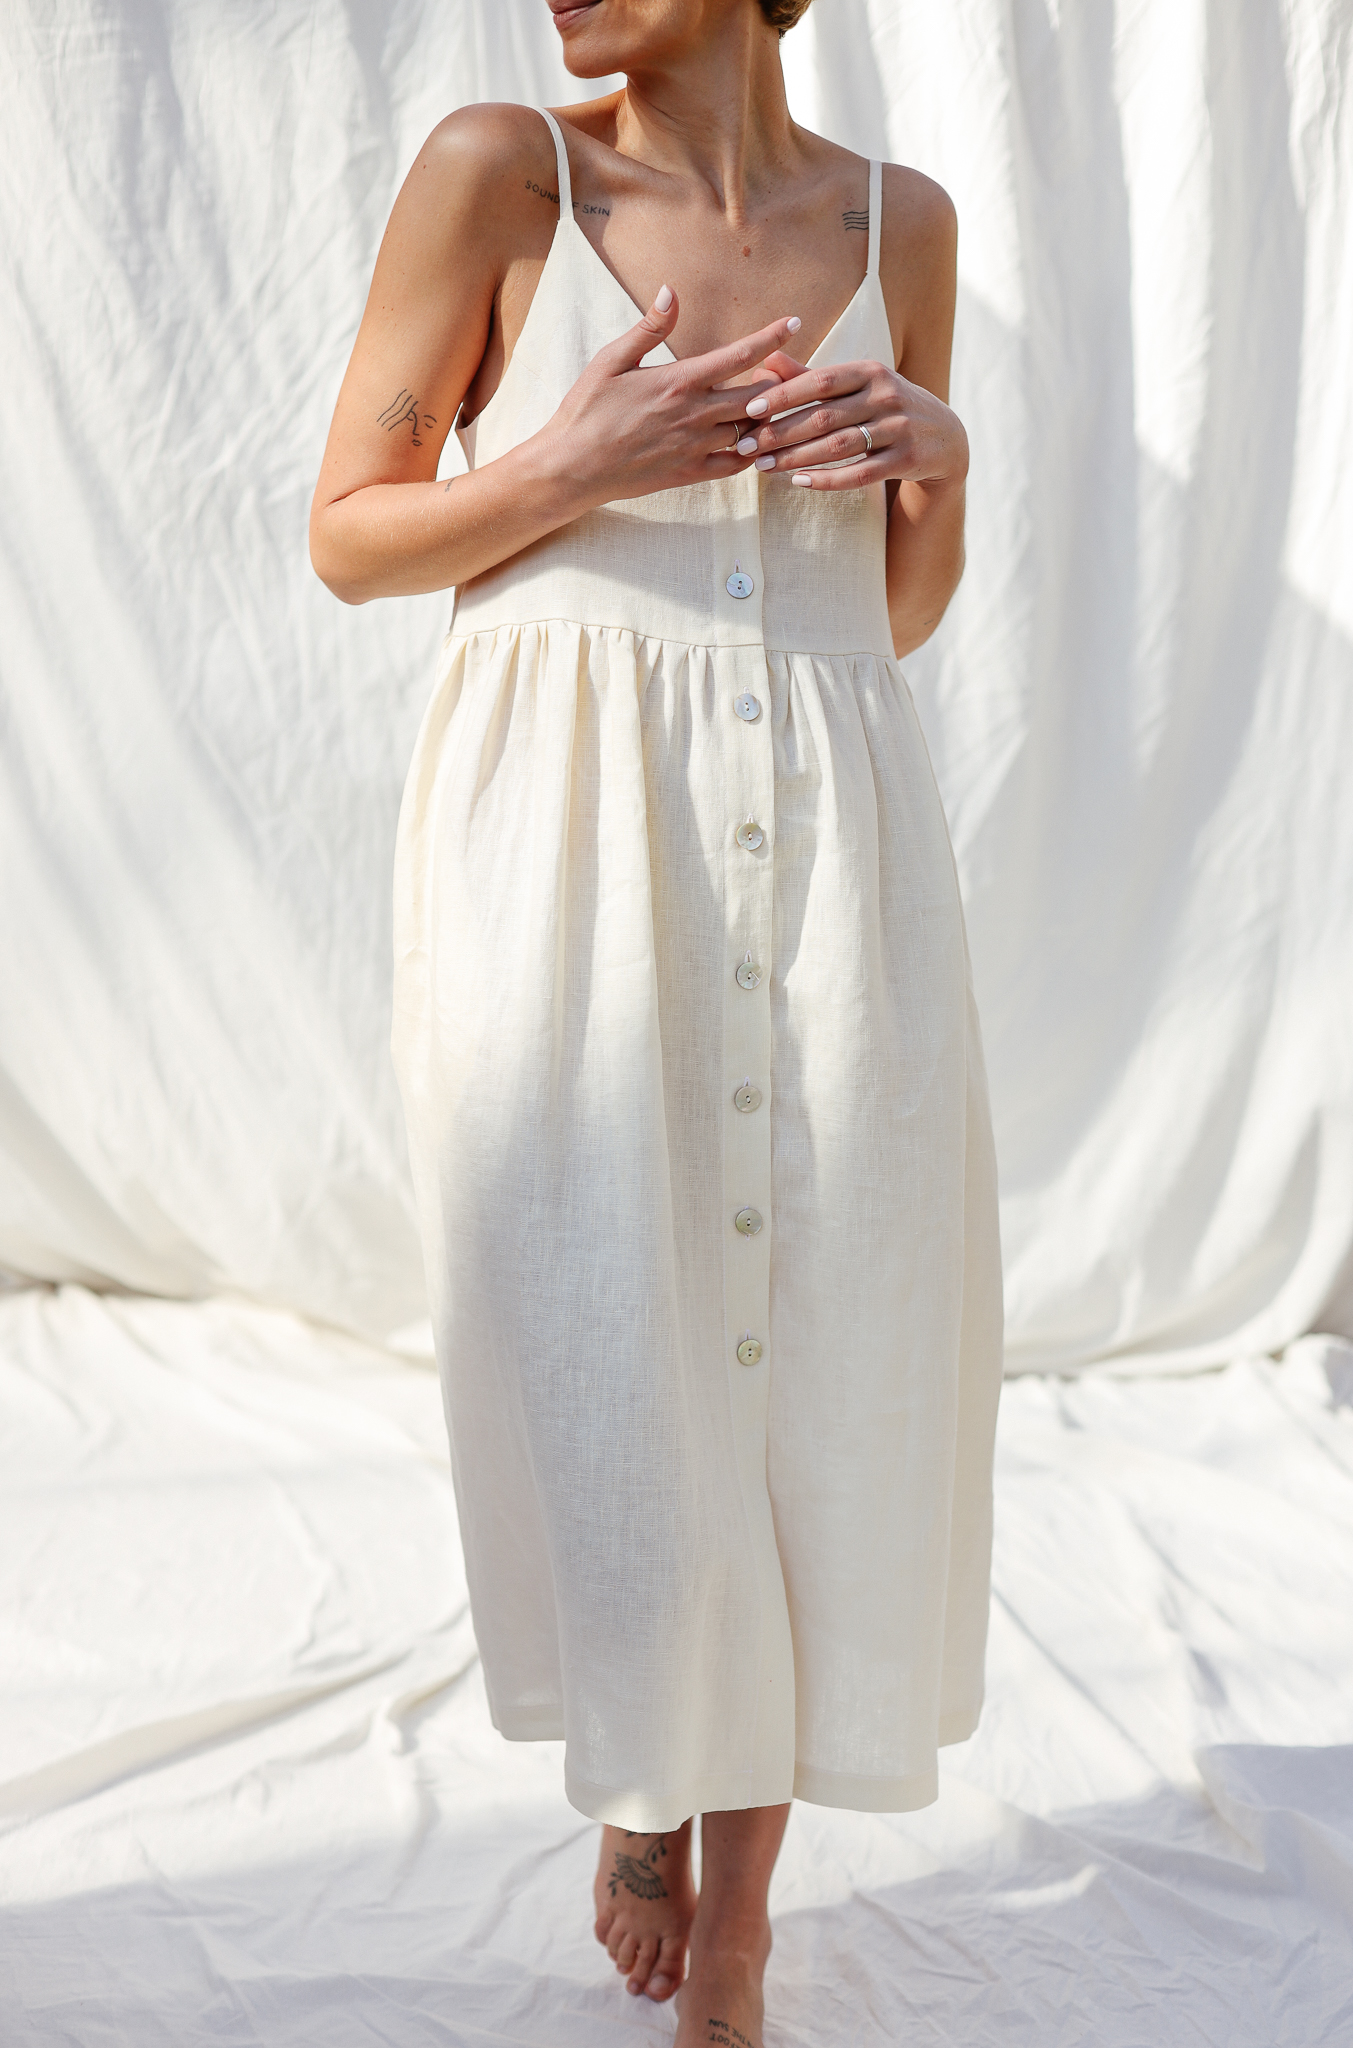 Women's Classic Midi Slip Dress and Shawl | Ivory